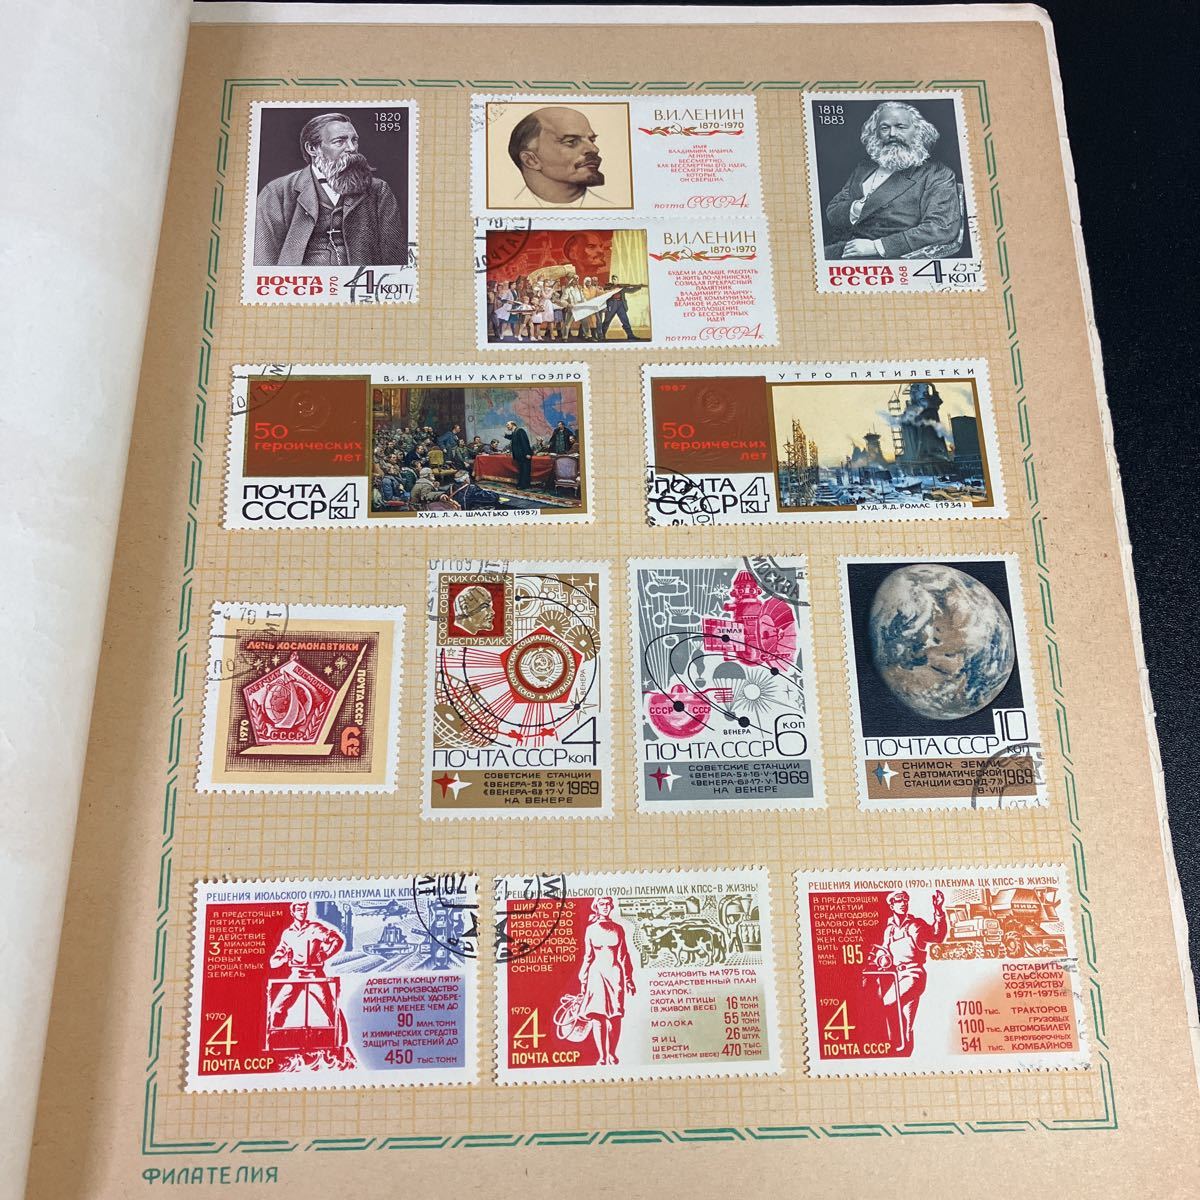 22-615sobieto ream . stamp .1970 period so ream stamp Russia 